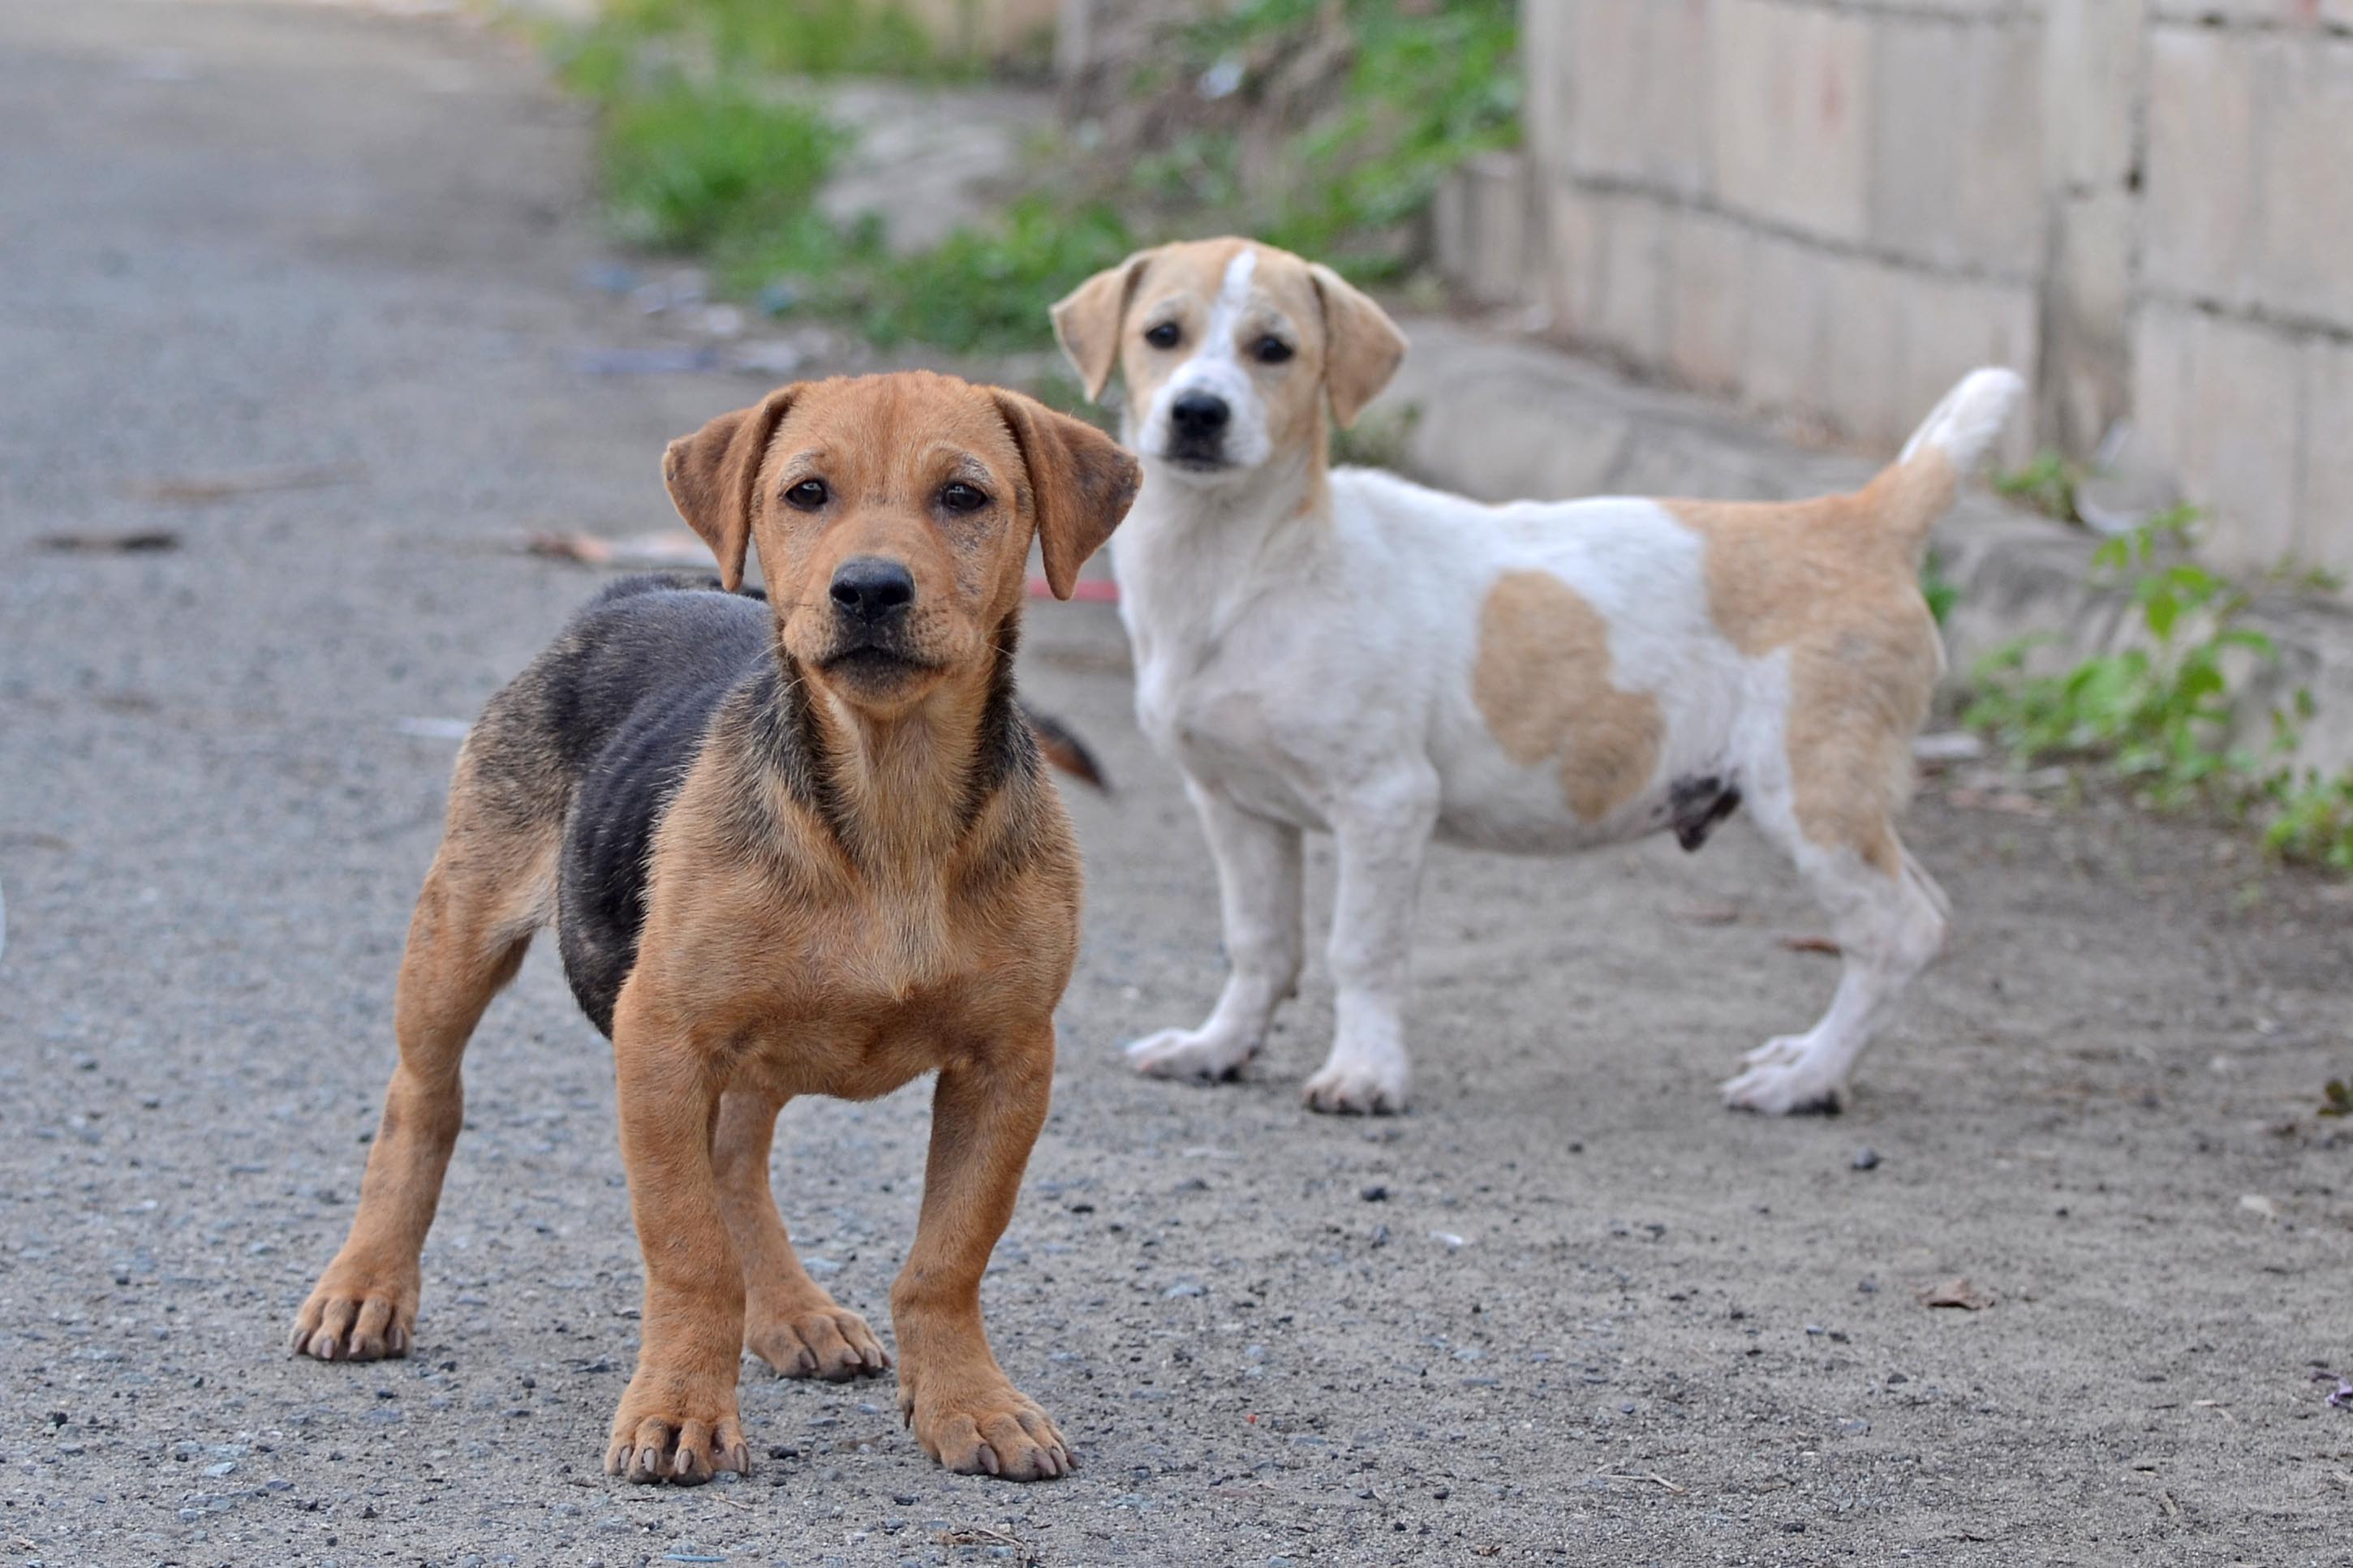 Flickr - ggallice - Street dogs (1)